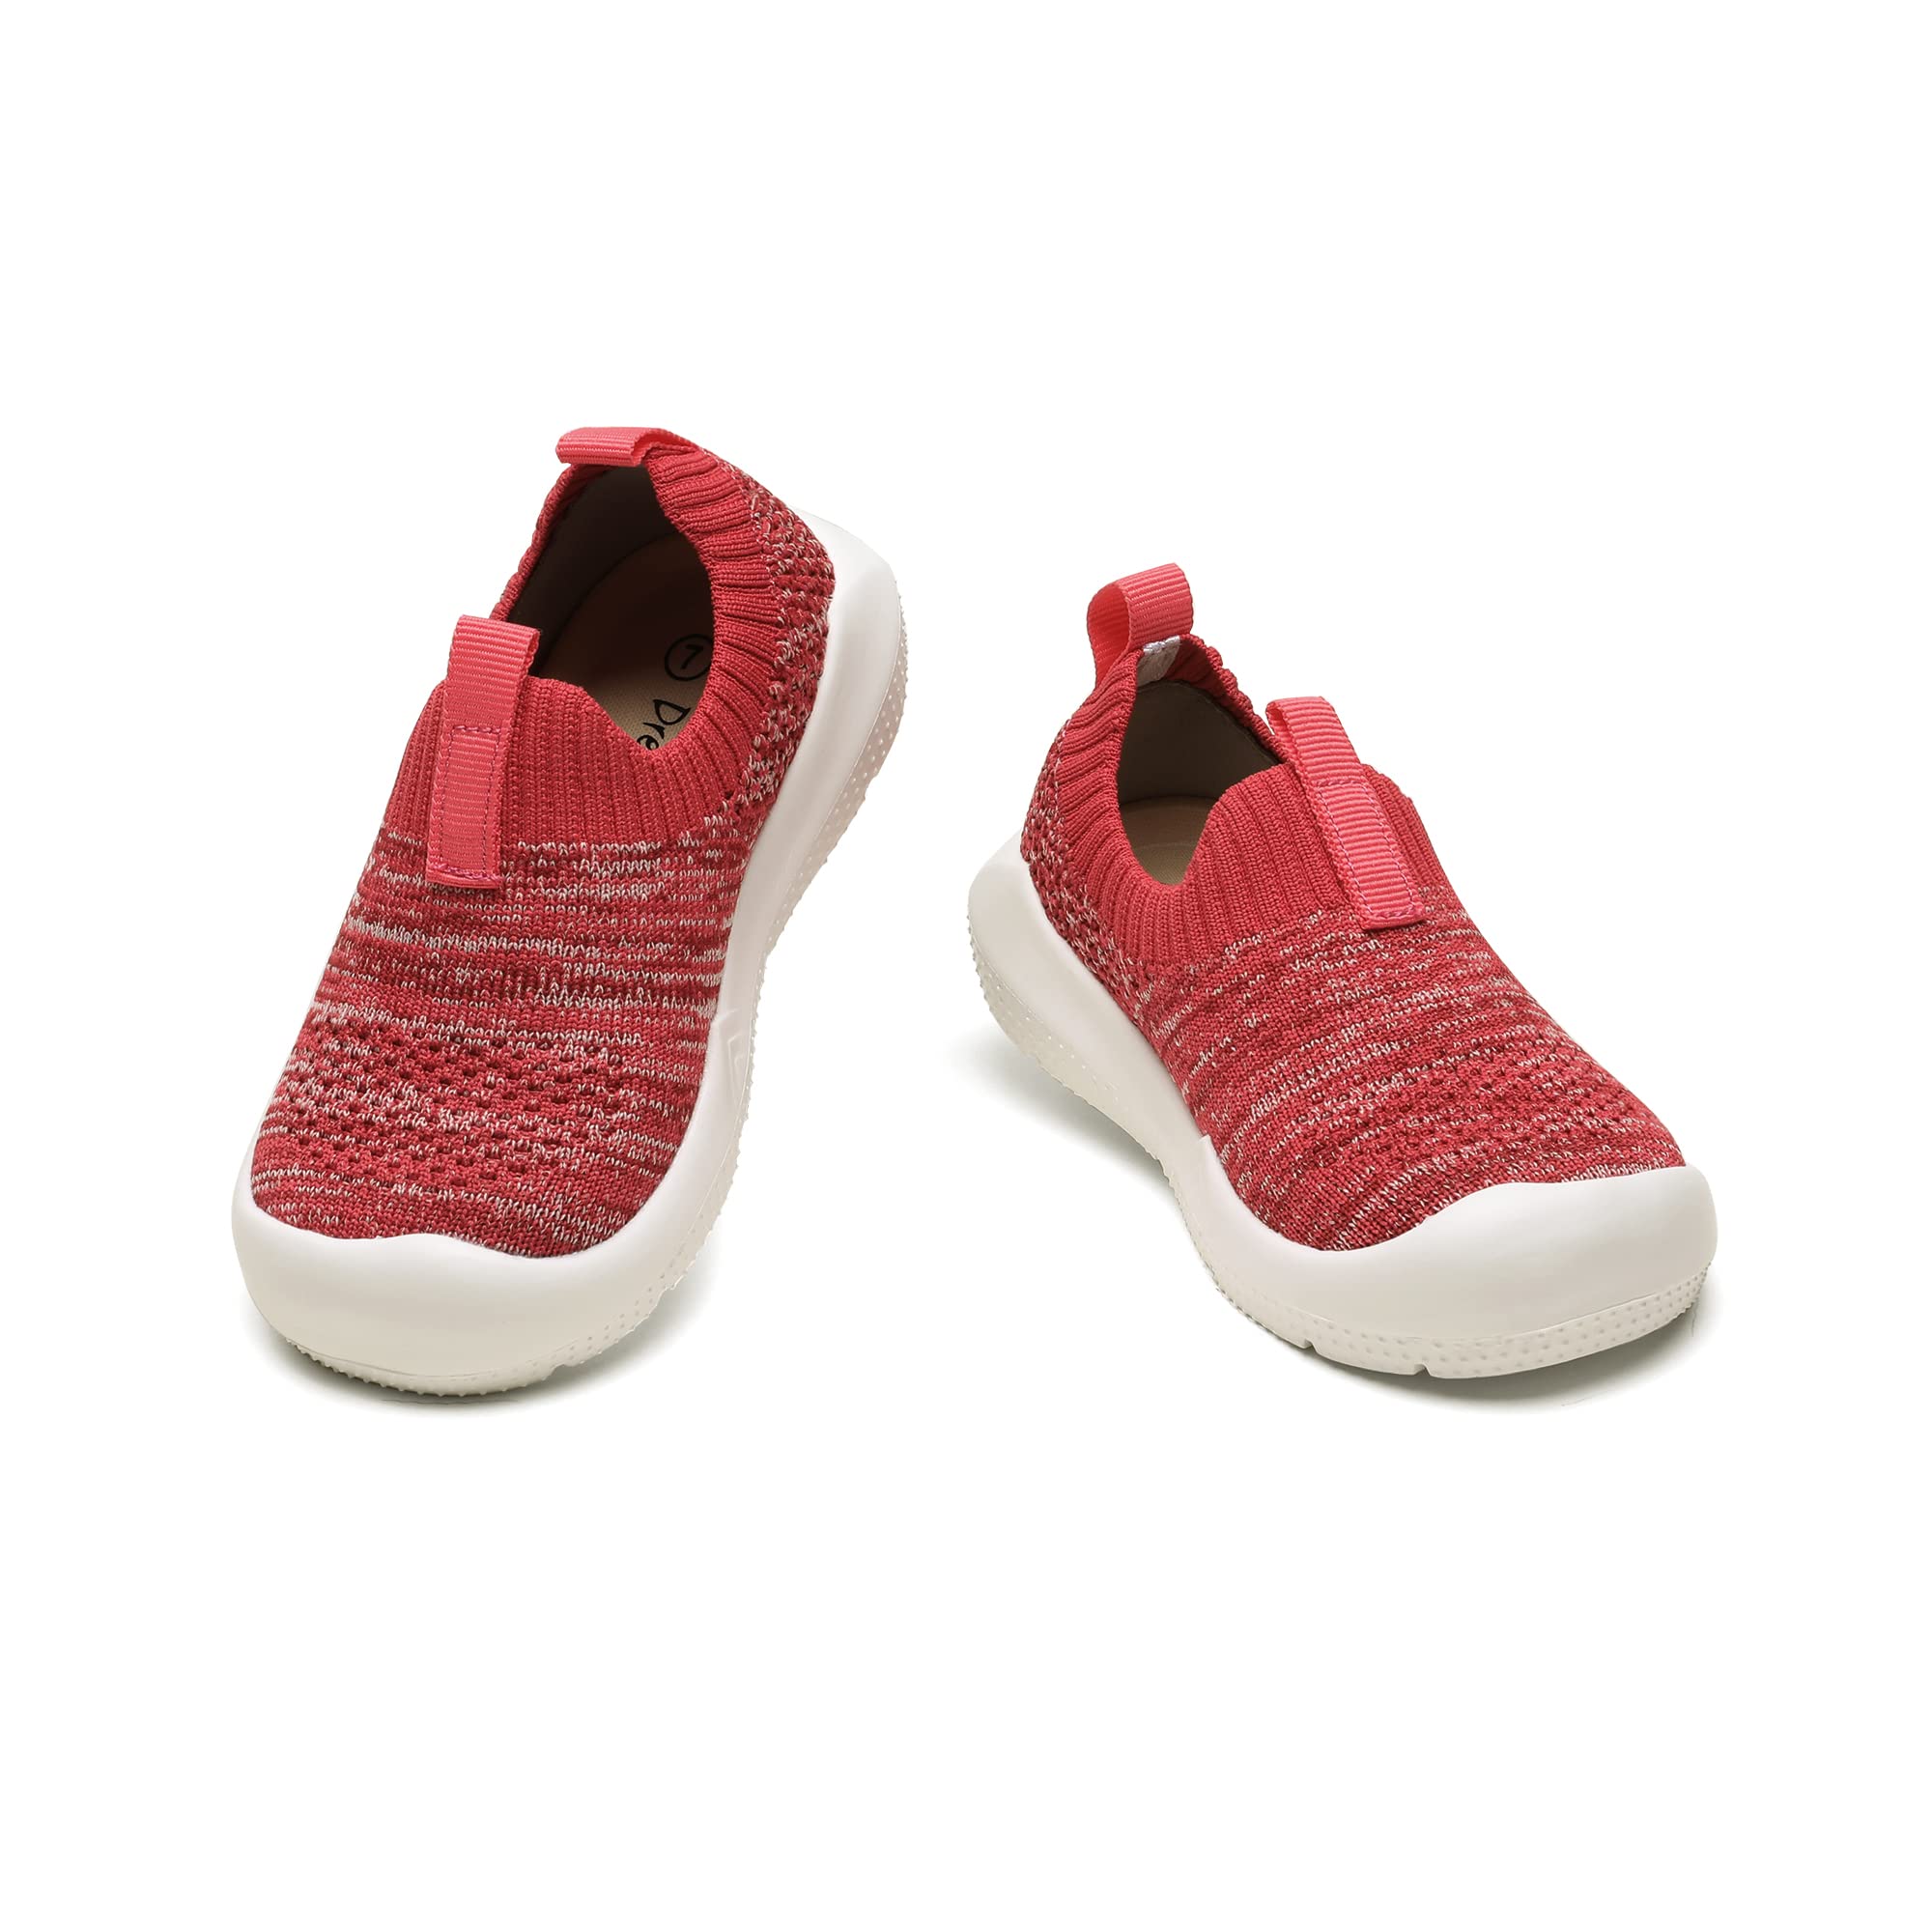 DREAM PAIRS Toddler Boys Girls Walking Shoes Lightweight Slip-on Sneakers(Toddler/Little Kid)